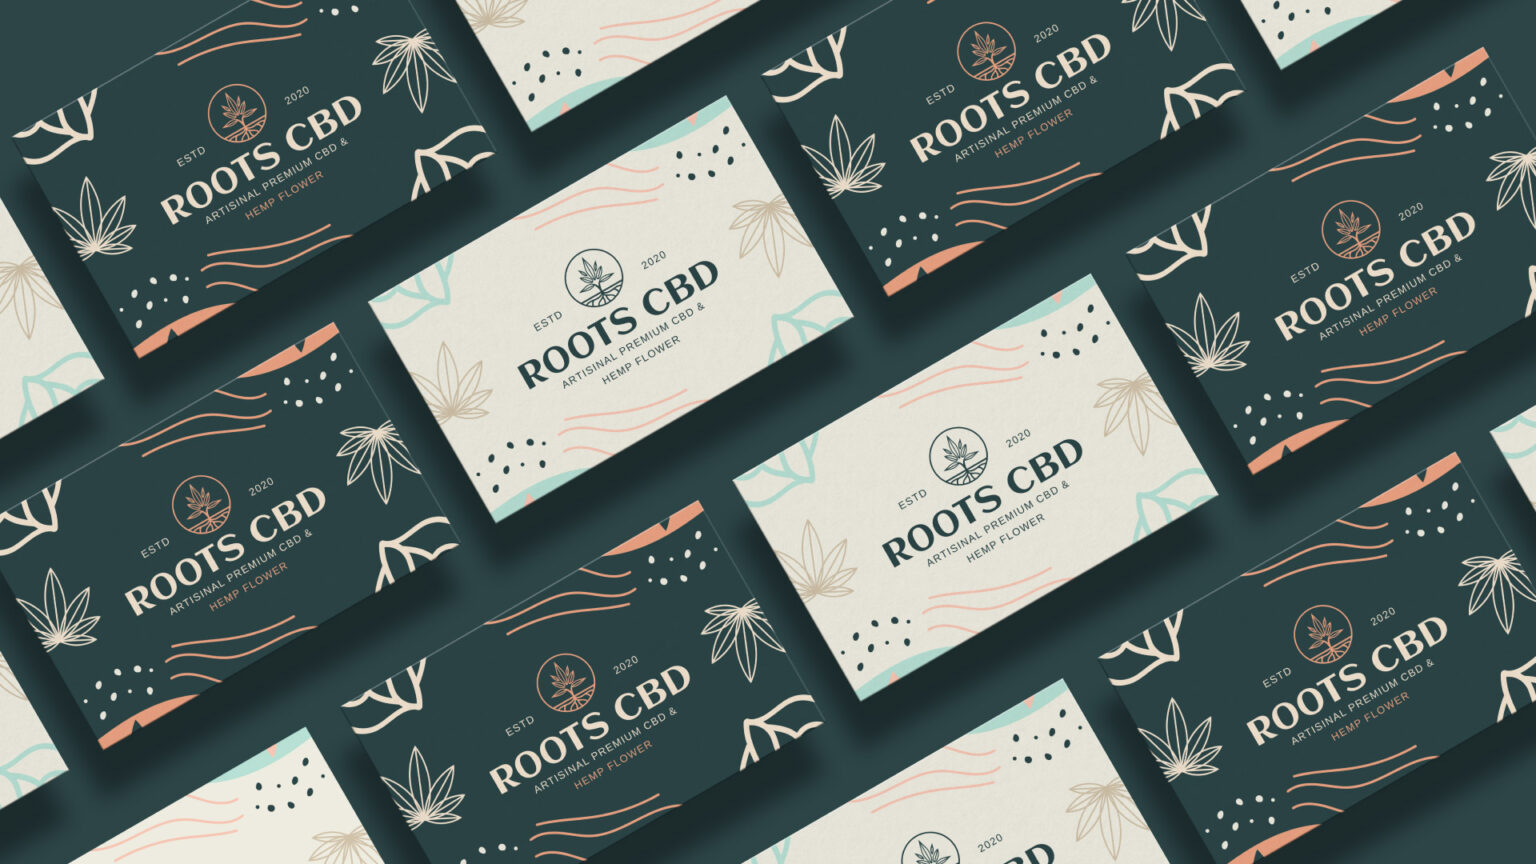 Roots CBD - Branding